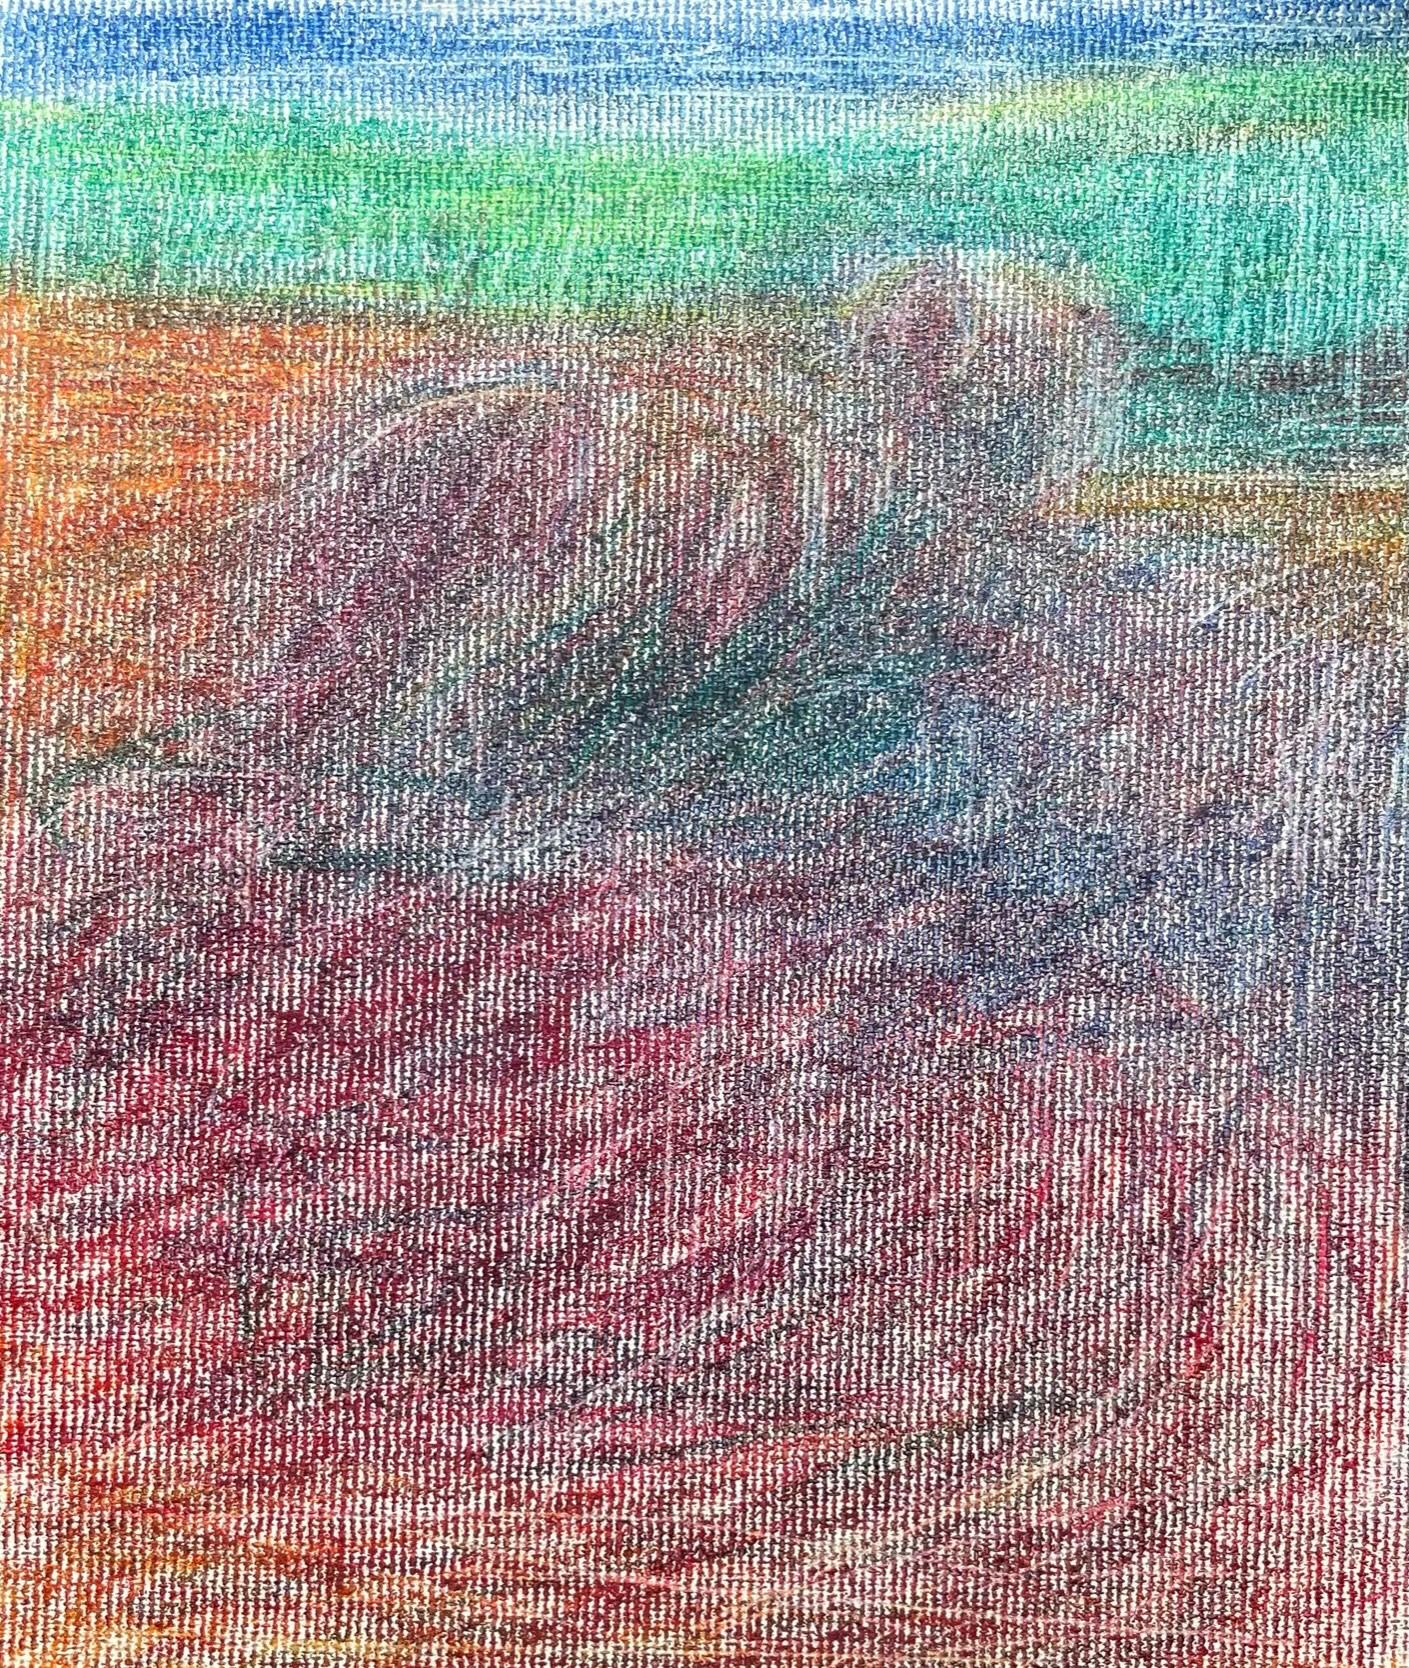 Body in the Field #9 - Landscape, Orange, Red, Coloured pencil  - Art by Zsolt Berszán